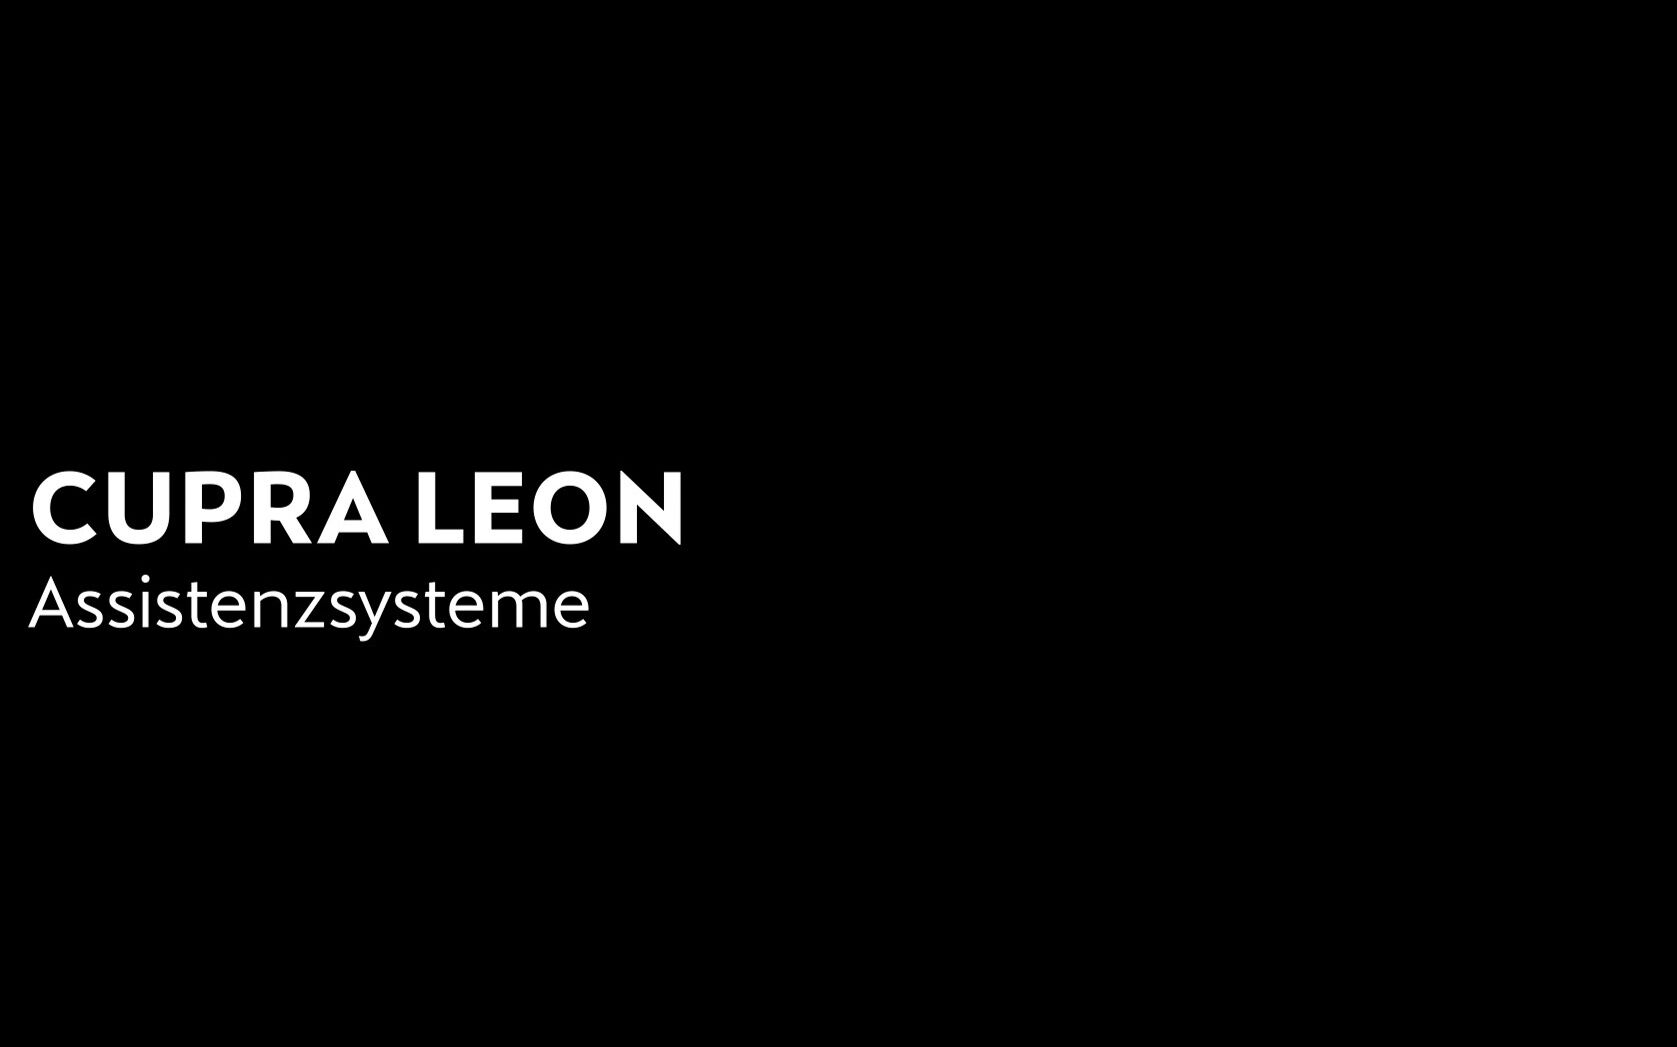 Leon - Assistenzsysteme - Cupra